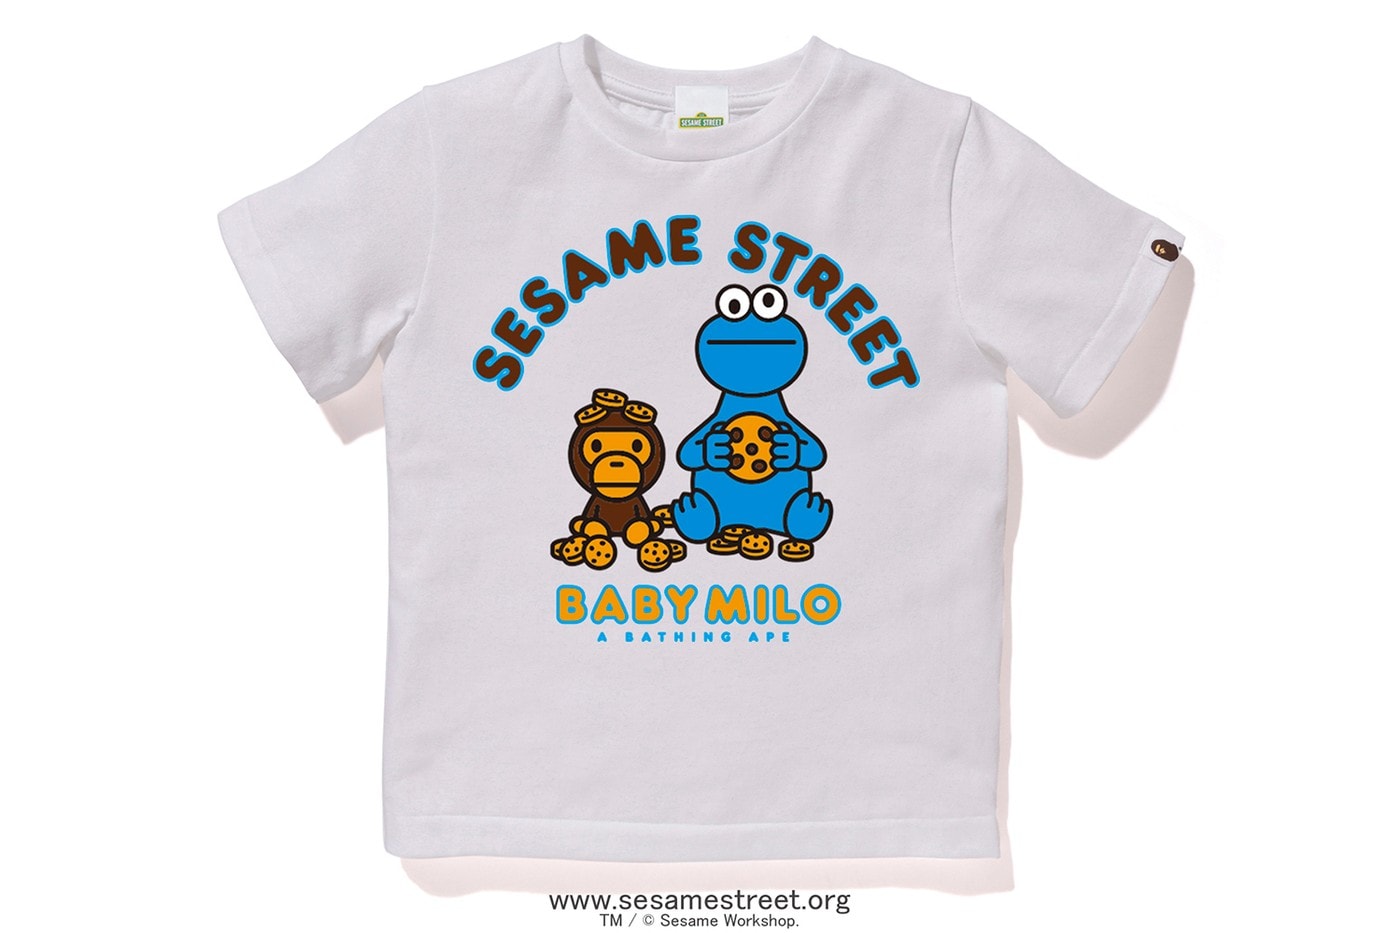 Sesame Street x BAPE Collection Collaboration Release Elmo Cookie Monster Baby Milo Bert Ernie